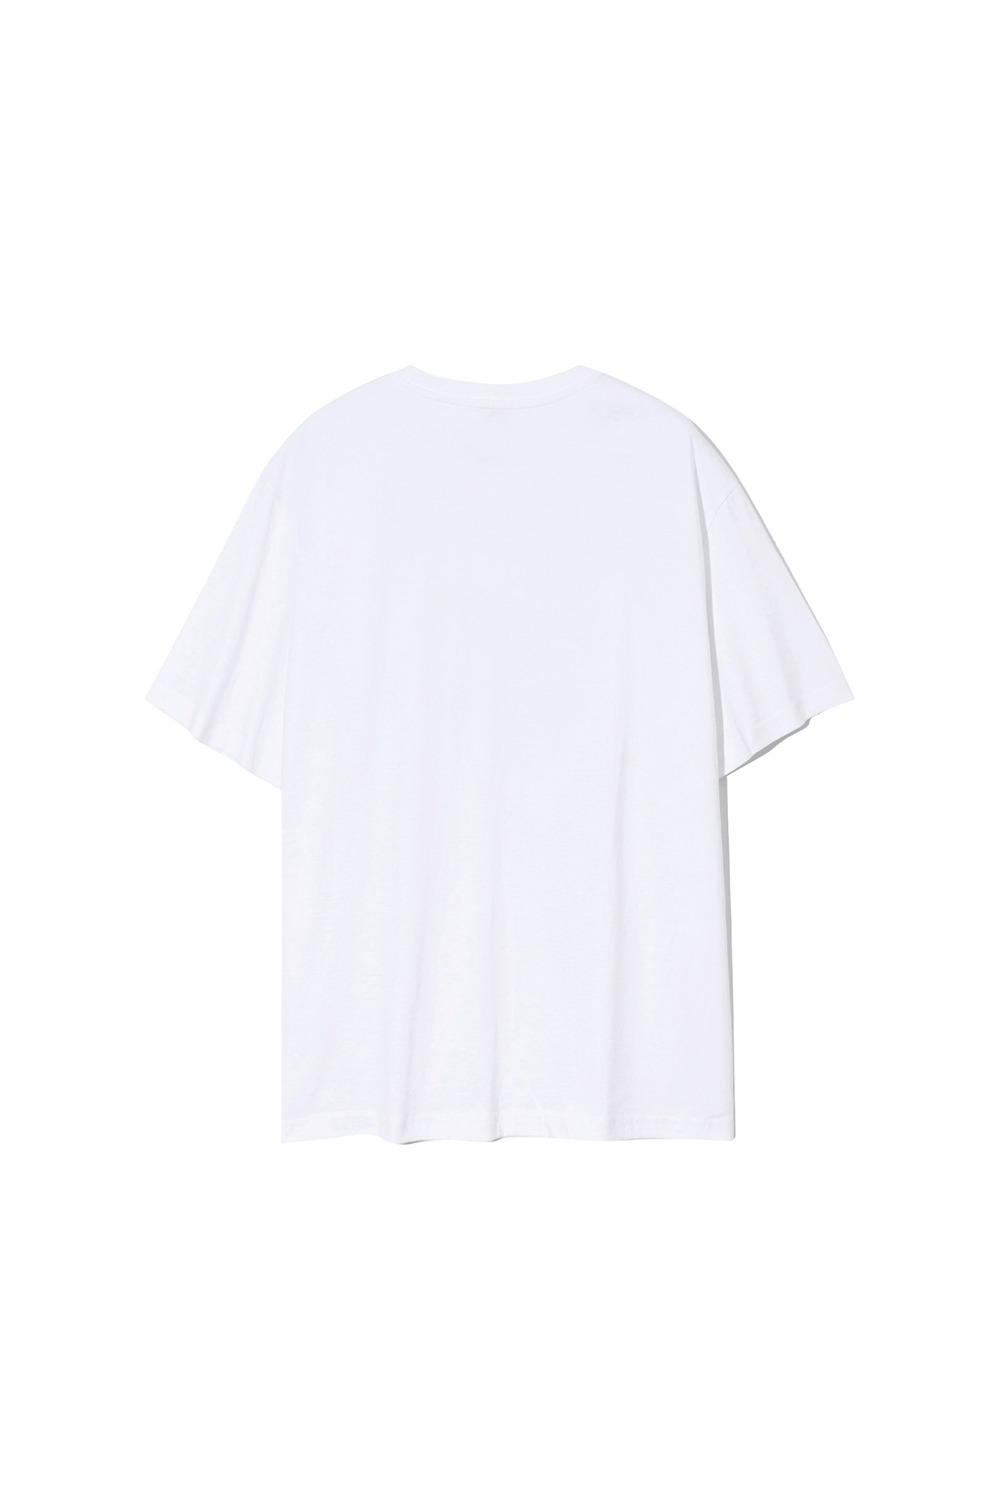 ULKIN Myosotis Graphic T-Shirt_White